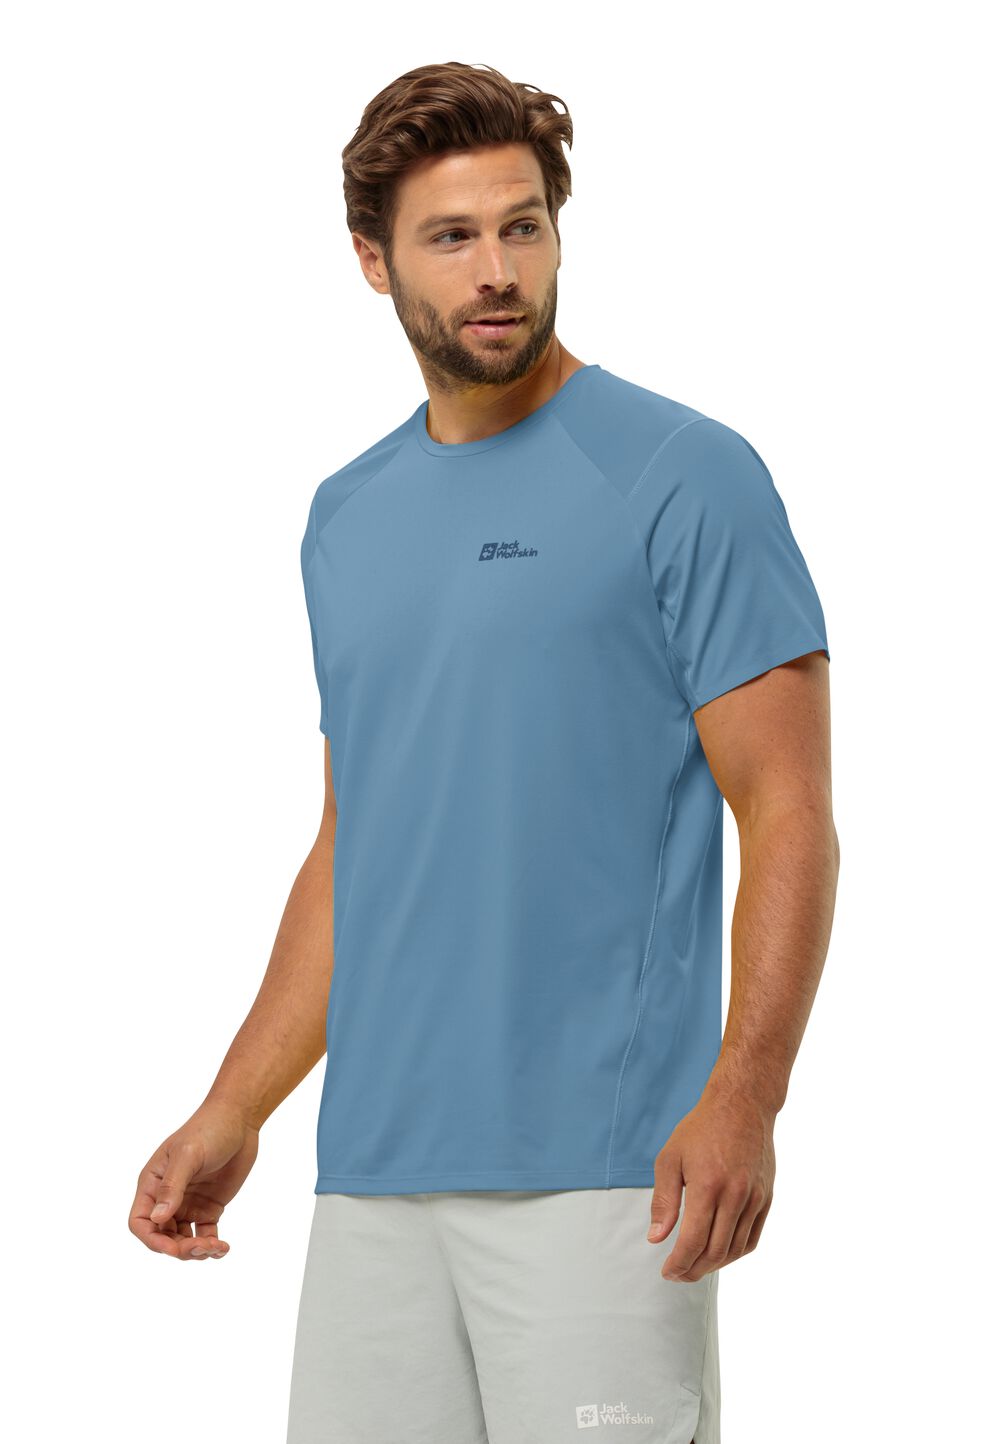 Jack Wolfskin Prelight Chill T-Shirt Men Functioneel shirt Heren L elemental blue elemental blue